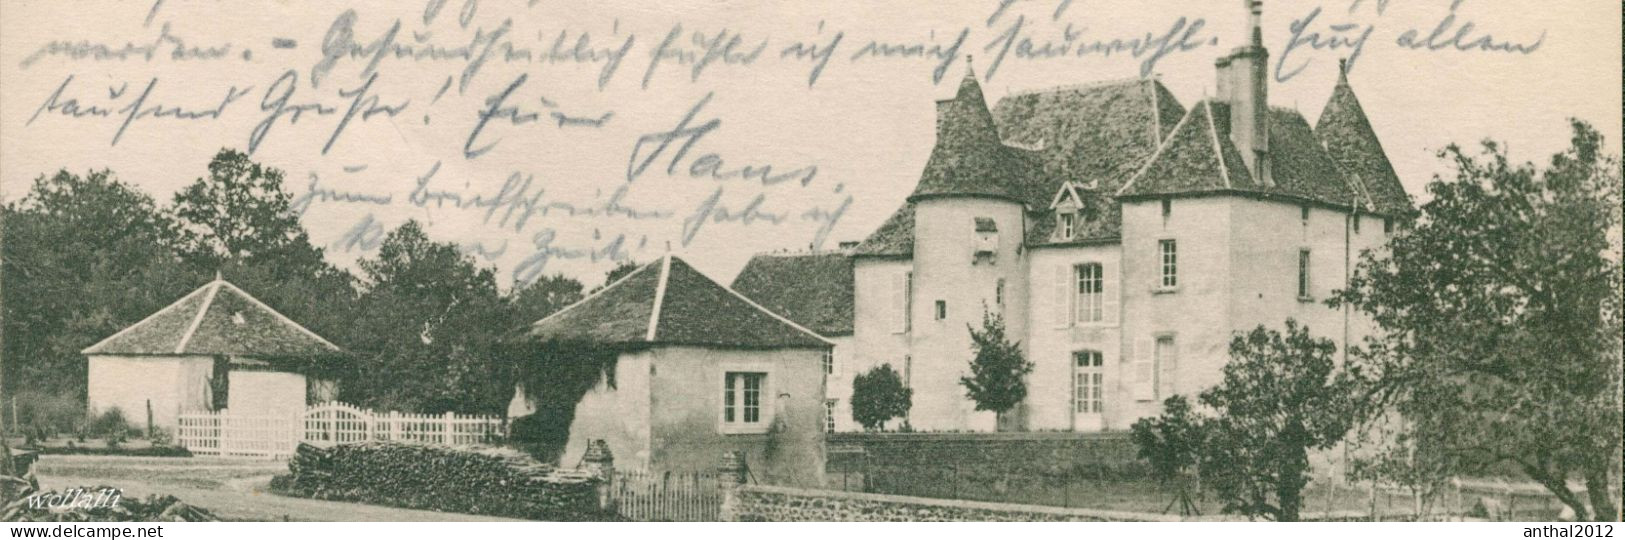 Superrar Boutissaint Par Treigny (Yonne) 89 Haus 18.6.1940 Photo Lavergne - Treigny